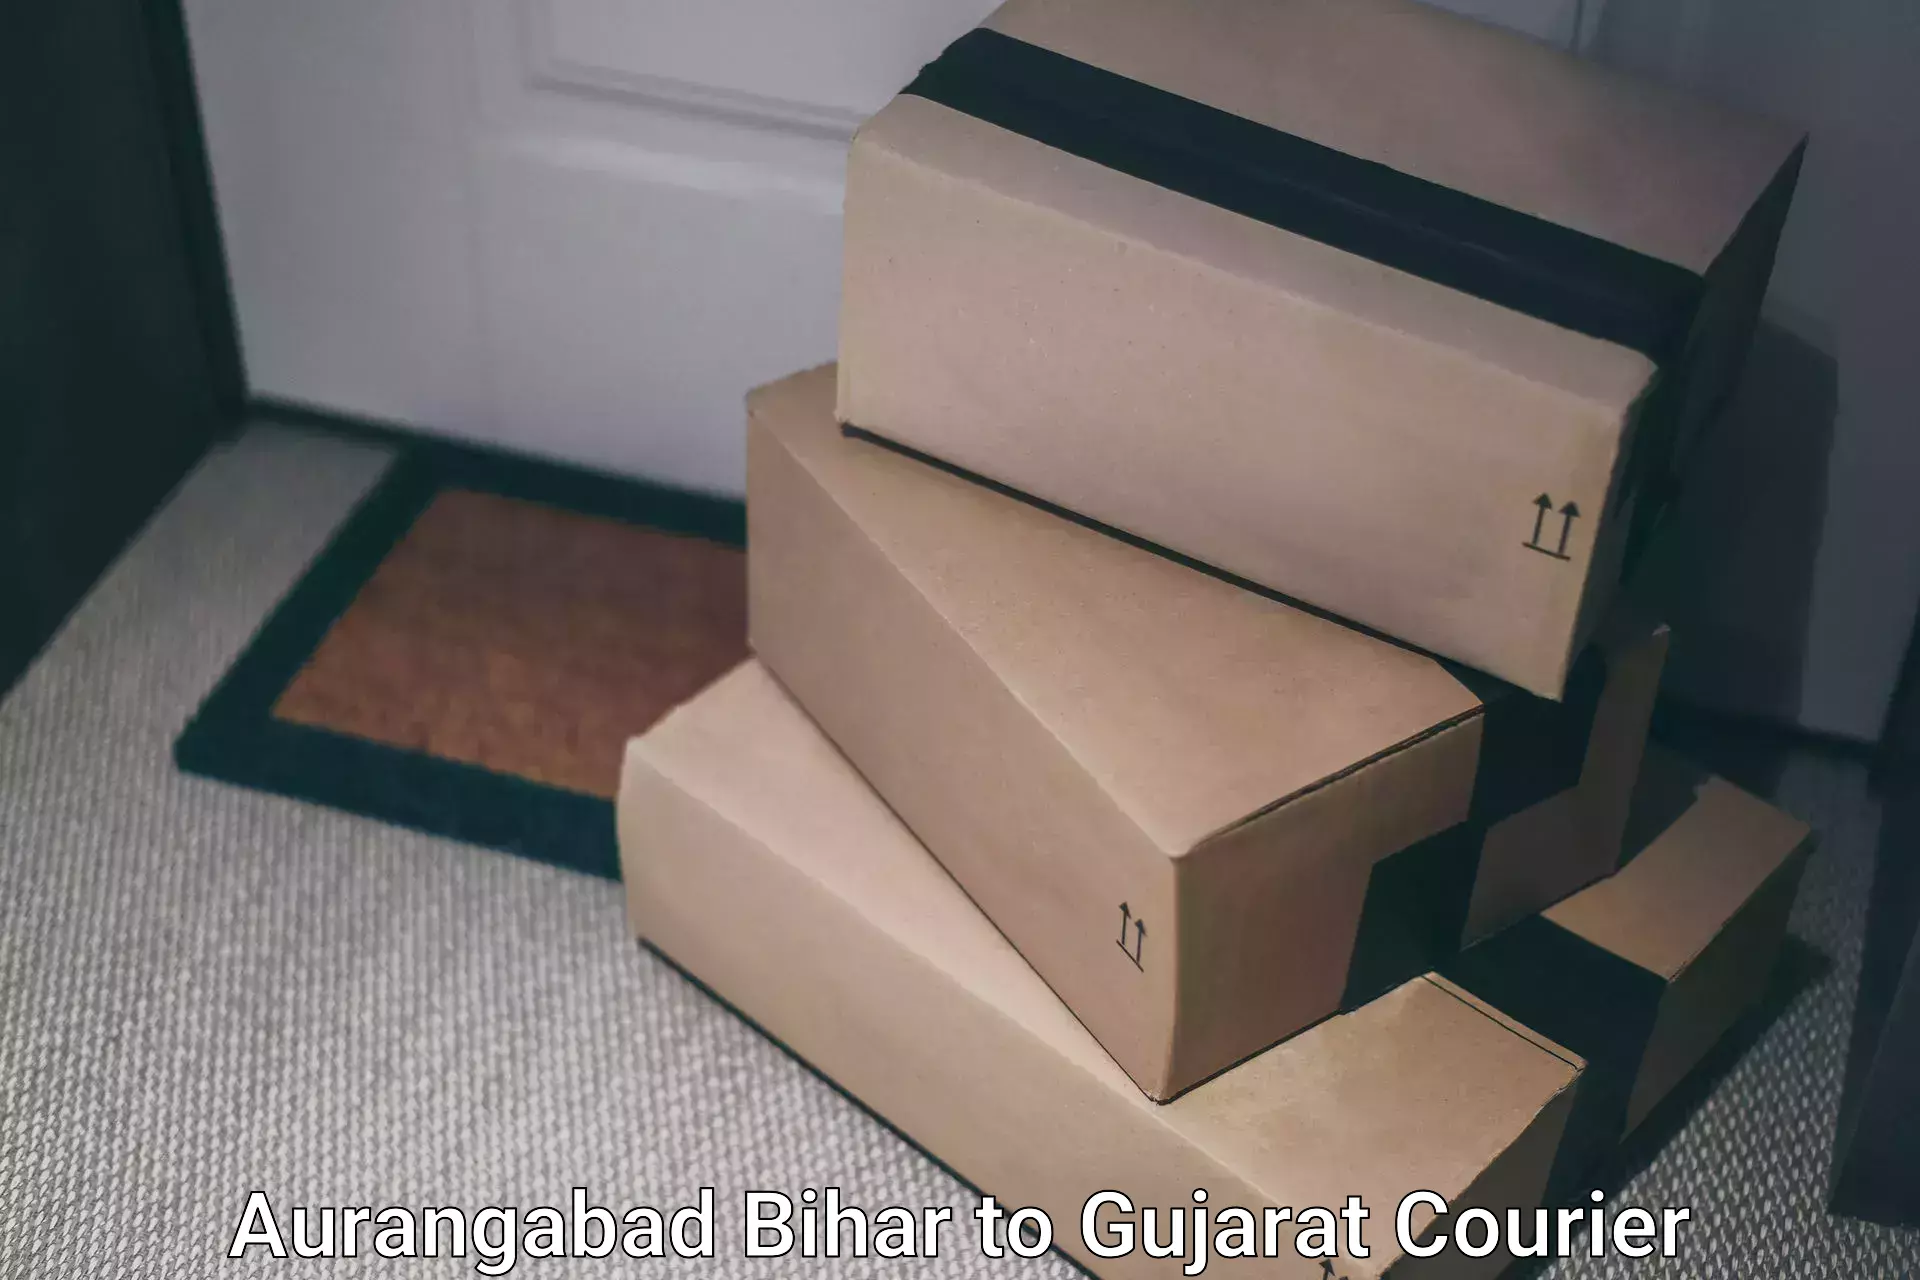 Residential courier service in Aurangabad Bihar to Gujarat